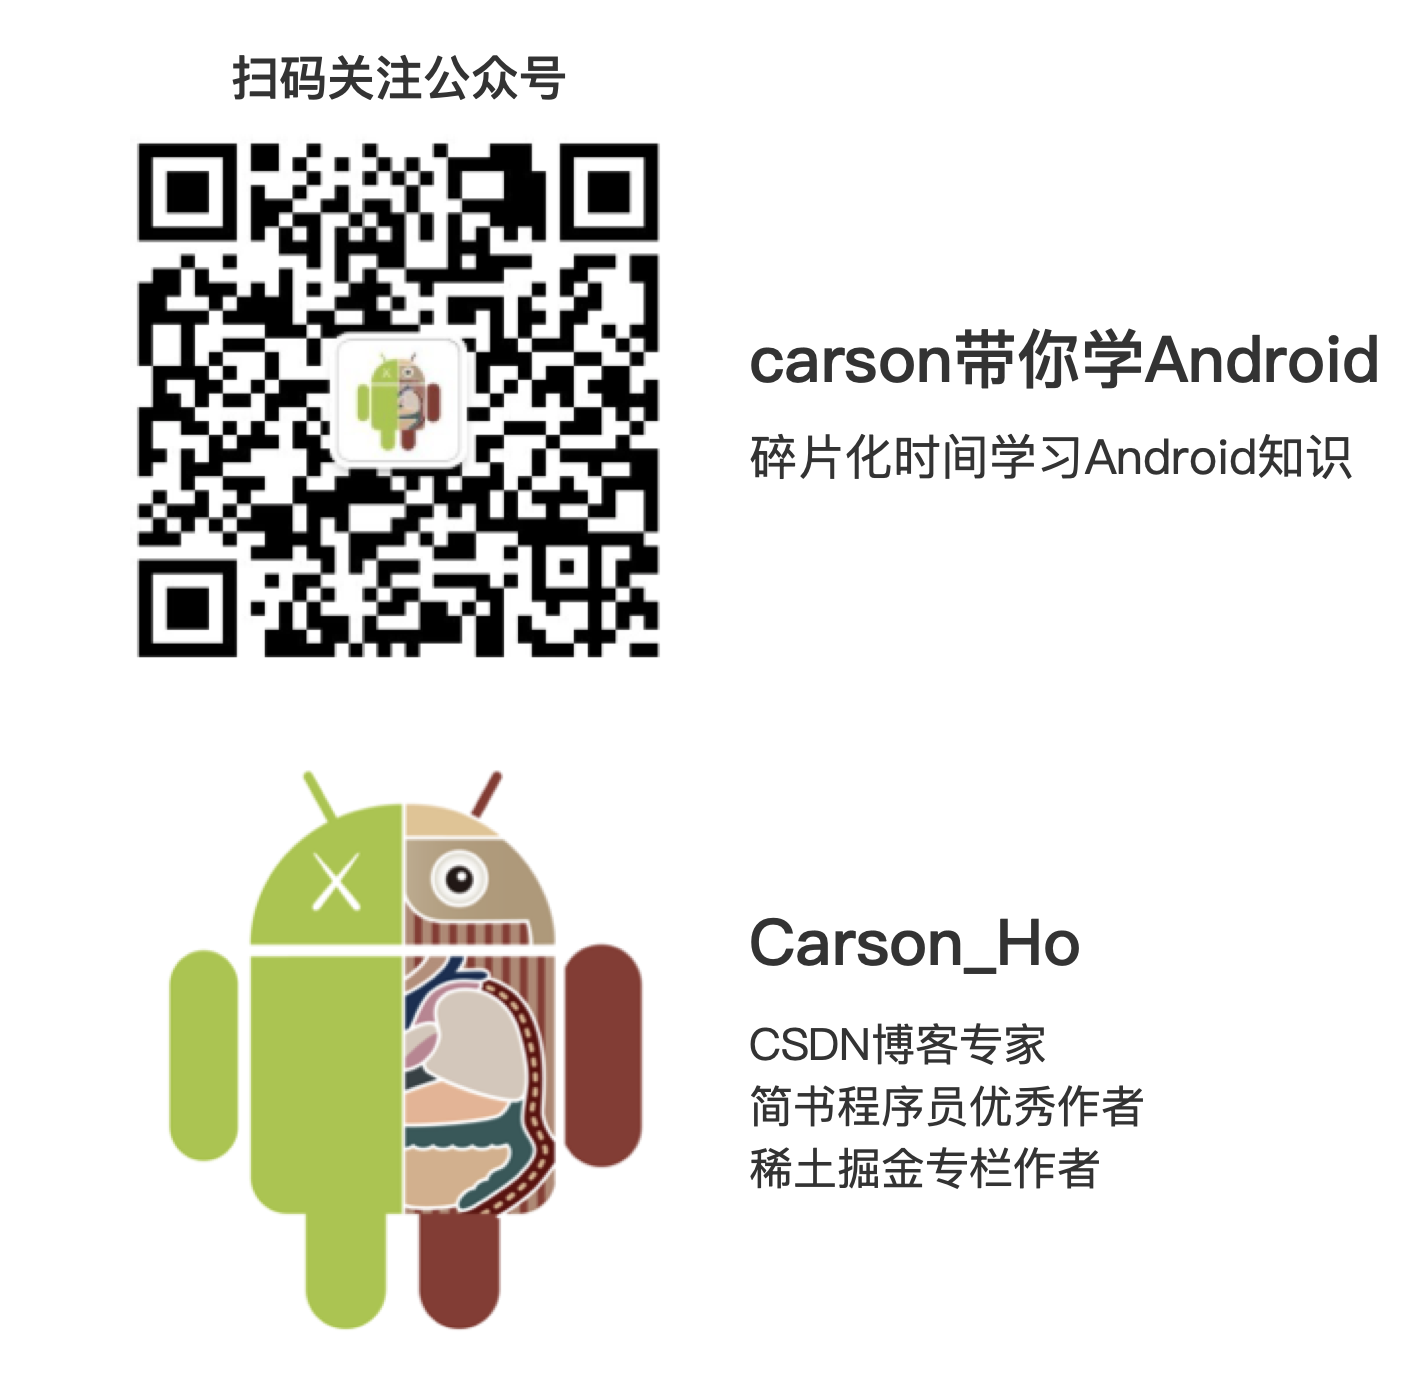 Carson带你学Android：请收好这一份全面&详细的Android学习指南[通俗易懂]